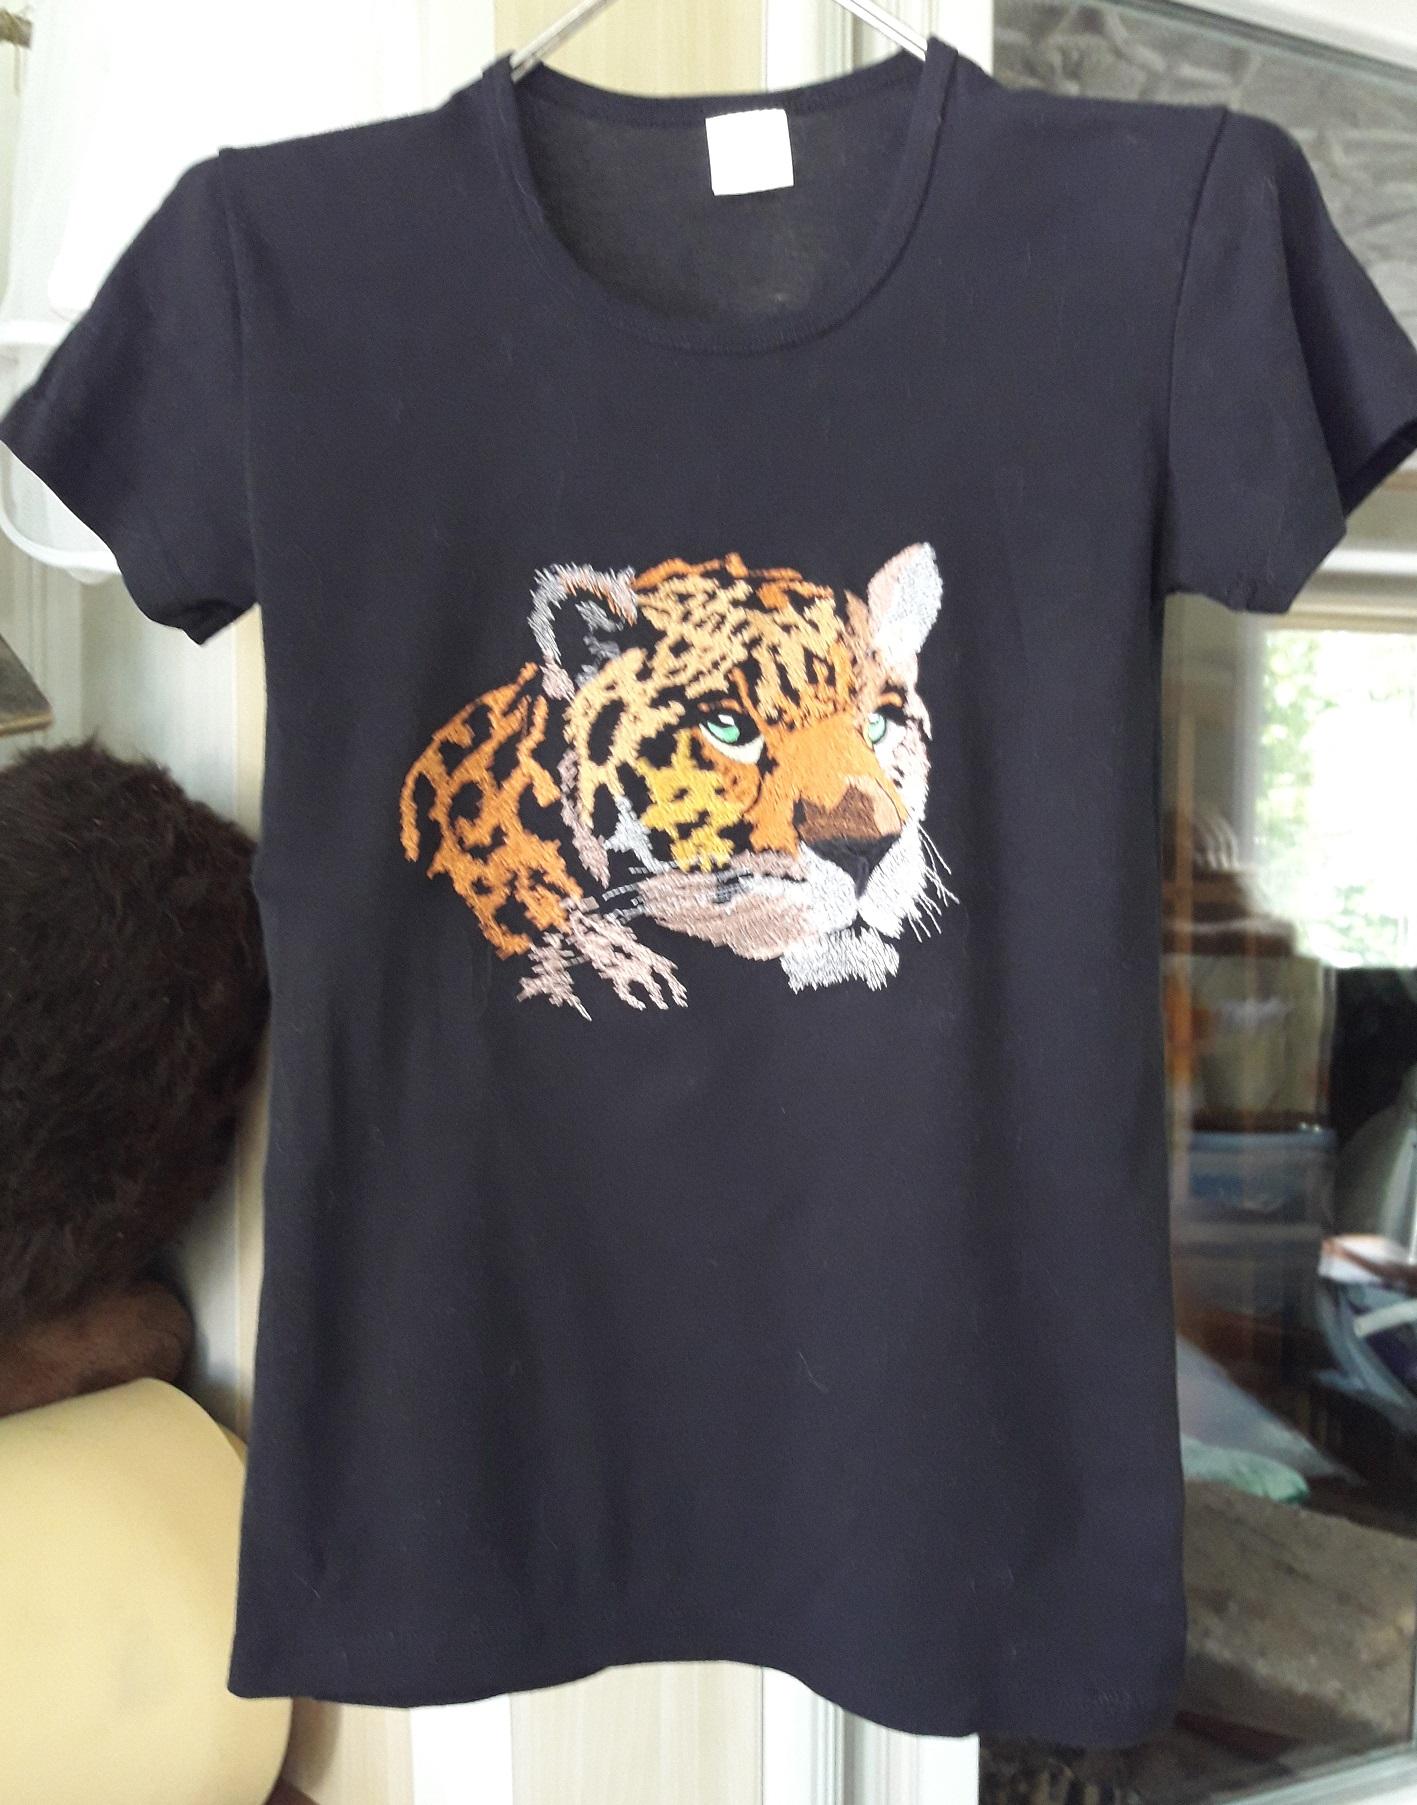 Leopard machine embroidery design